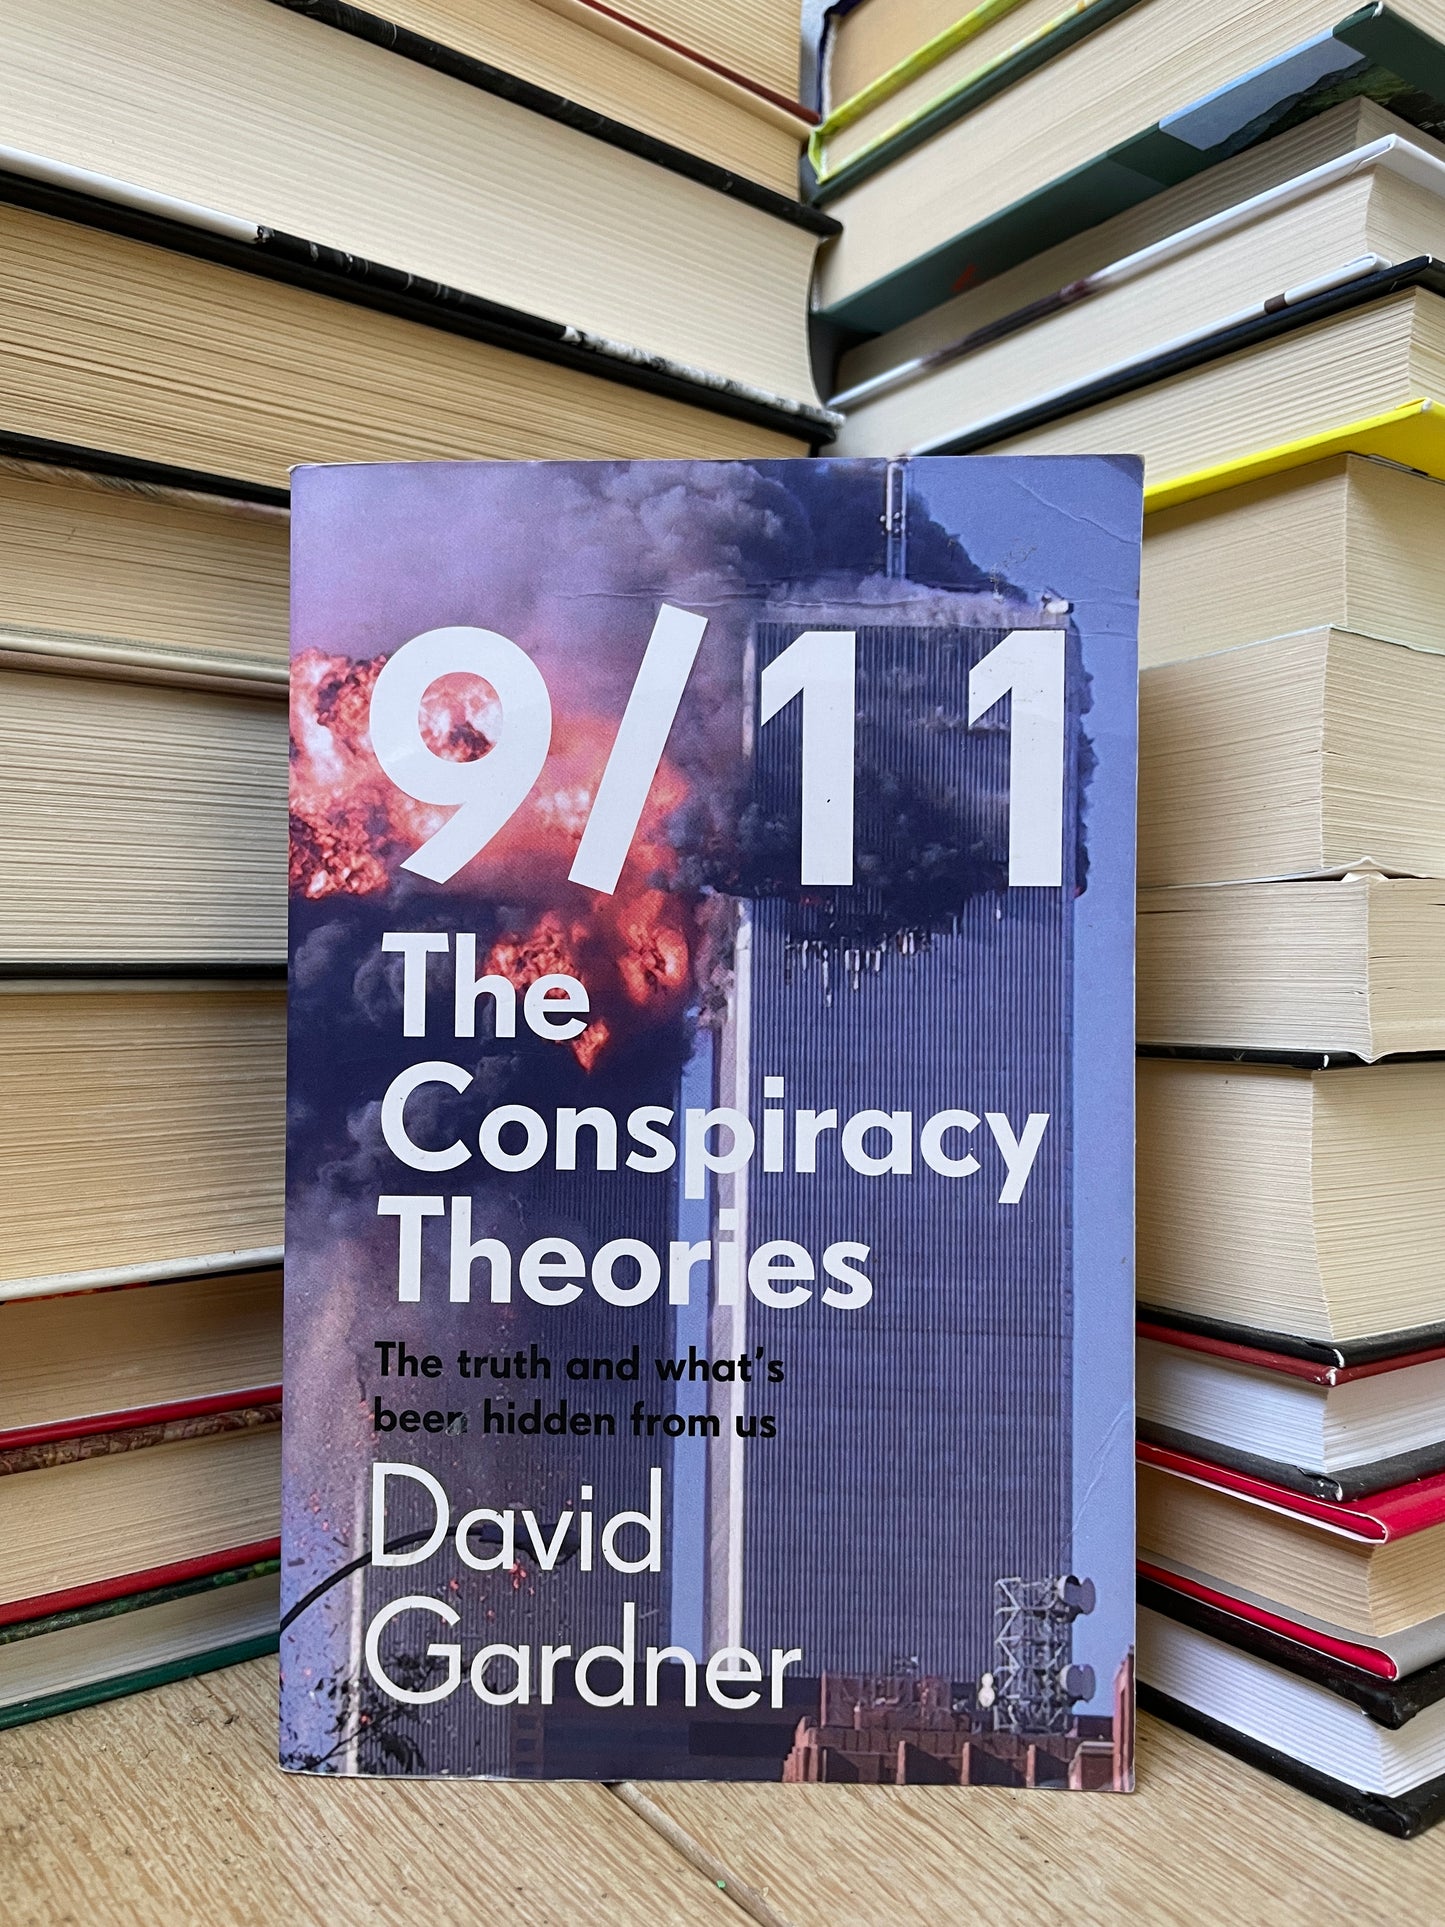 David Gardner - 9/11 The Conspiracy Theories